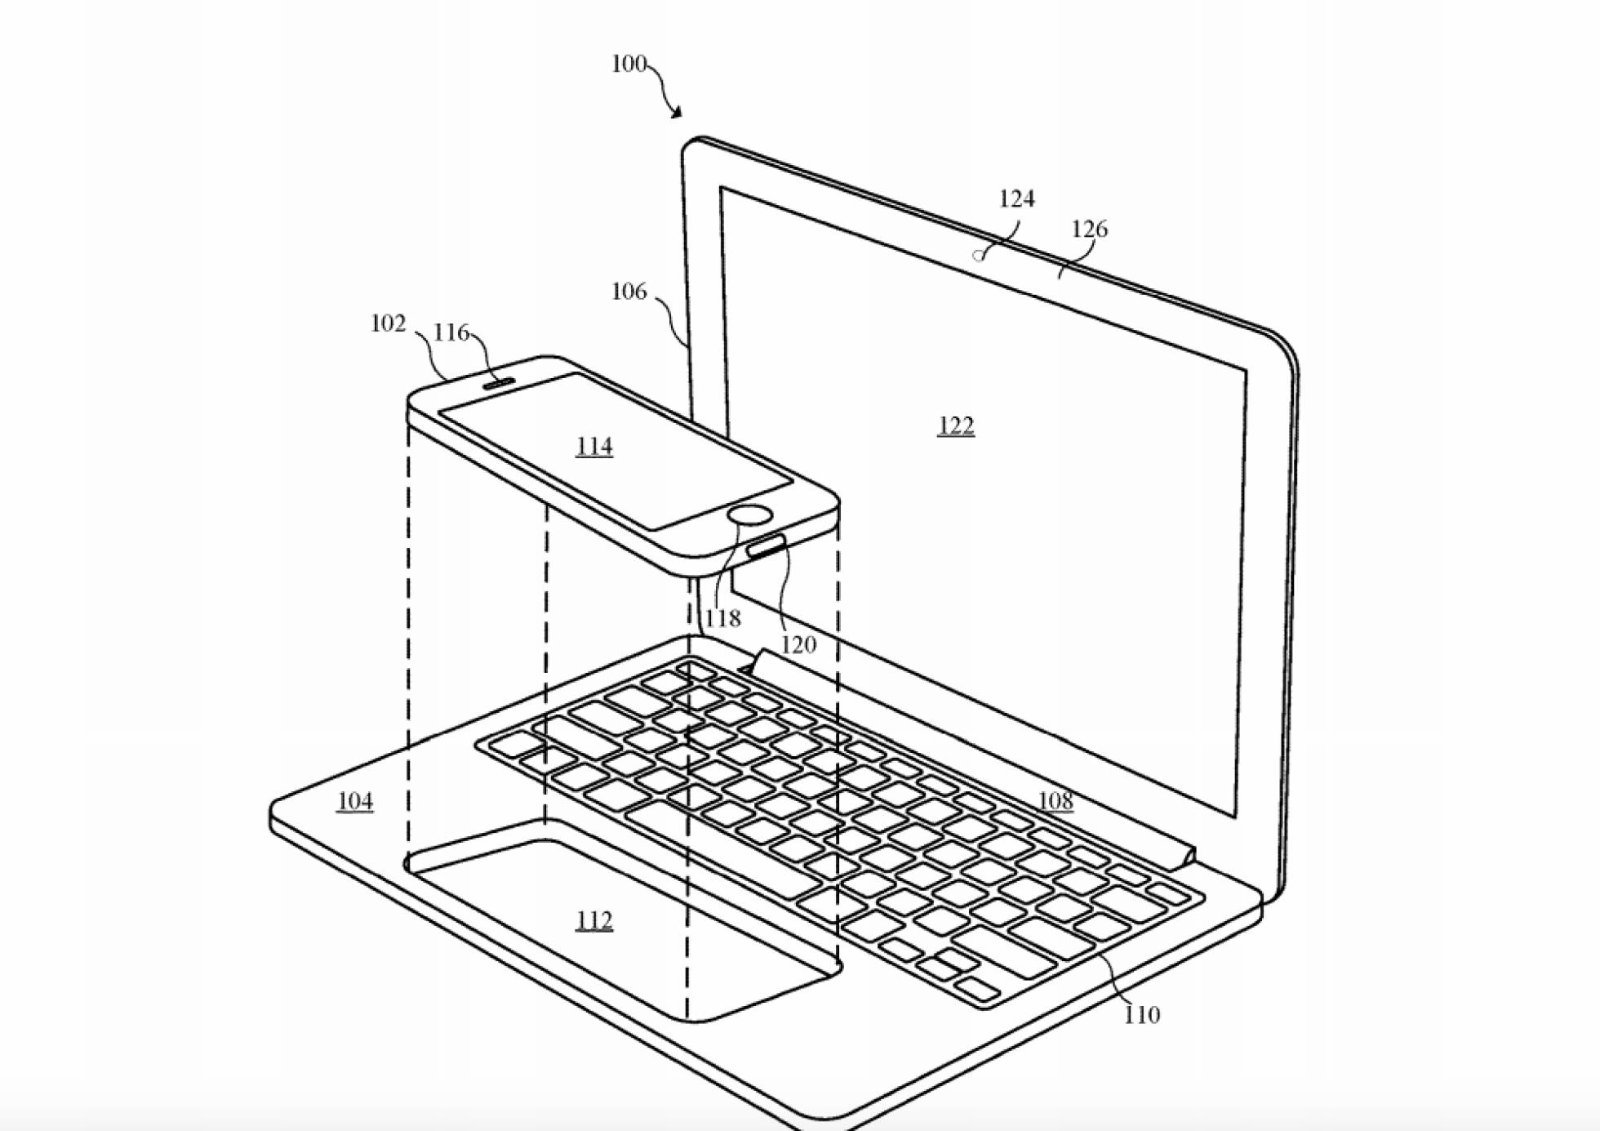 Apple, patente que copia al Motorola Atrix